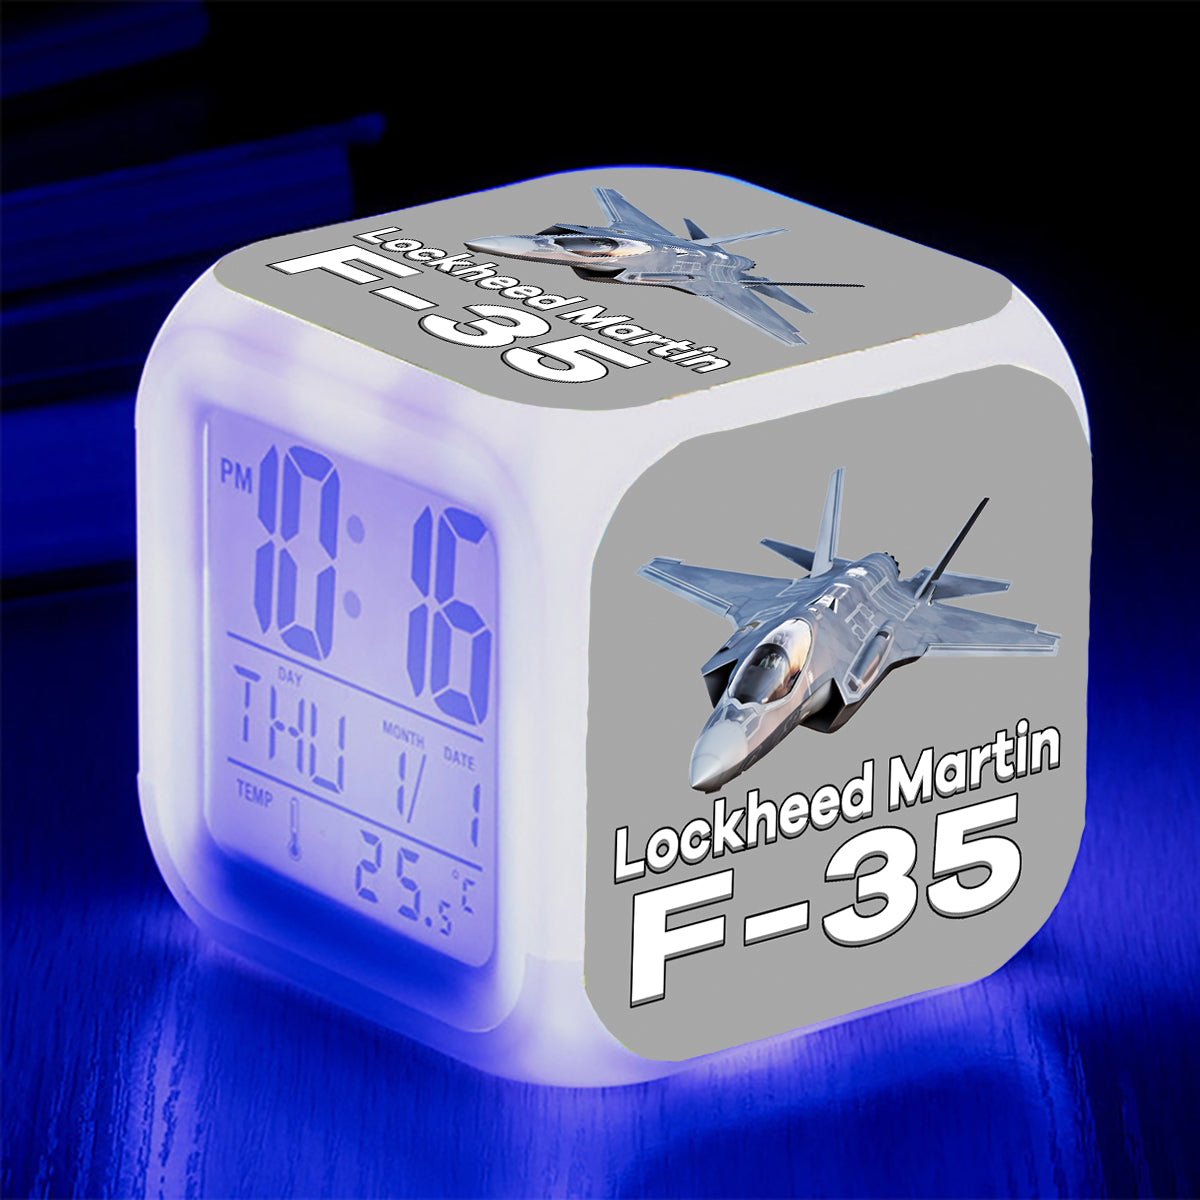 The Lockheed Martin F35 Designed "7 Colour" Digital Alarm Clock